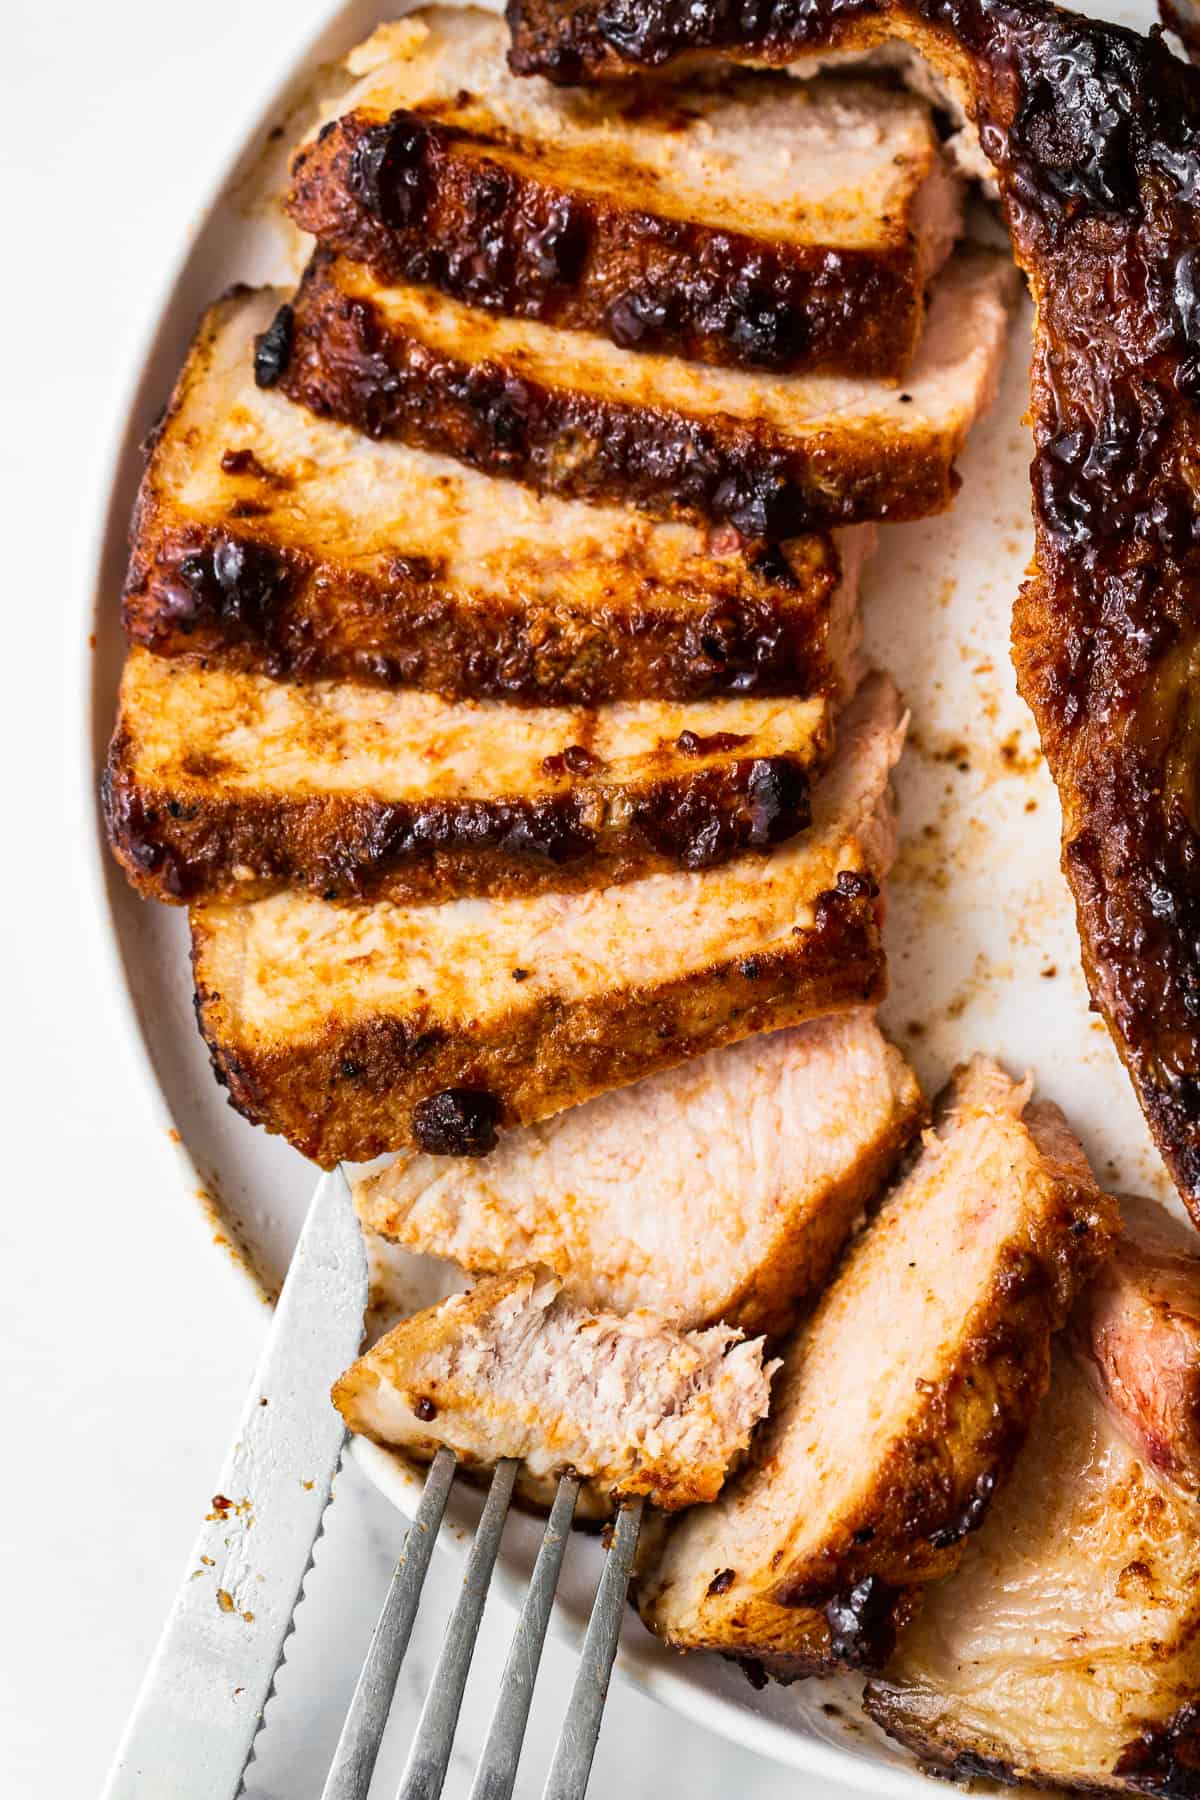 Sliced pork chops on a plate.